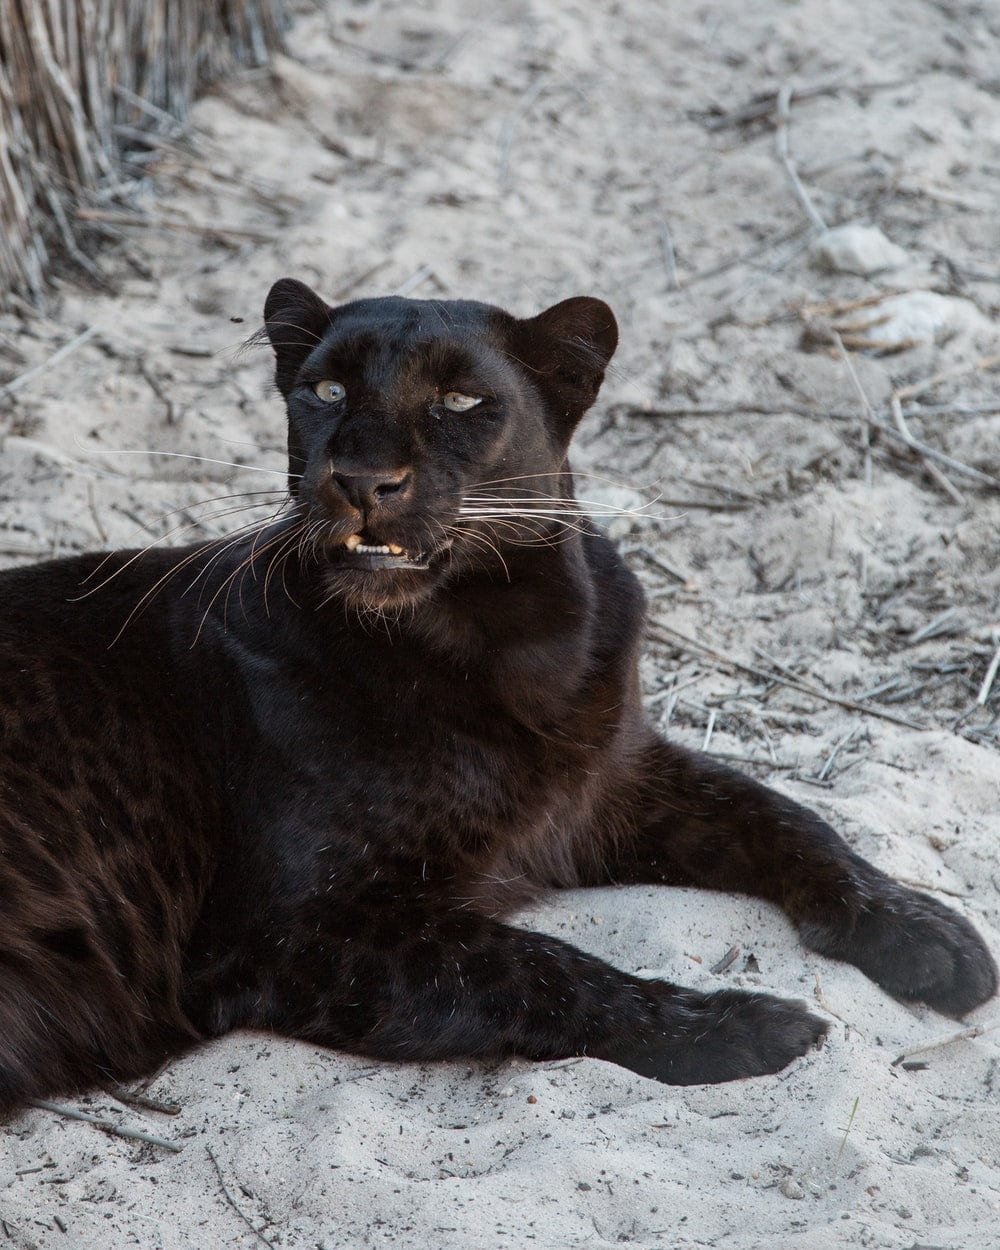 Cross Stitch | Black Panther - Black Jaguar Resting On Sand - Cross Stitched